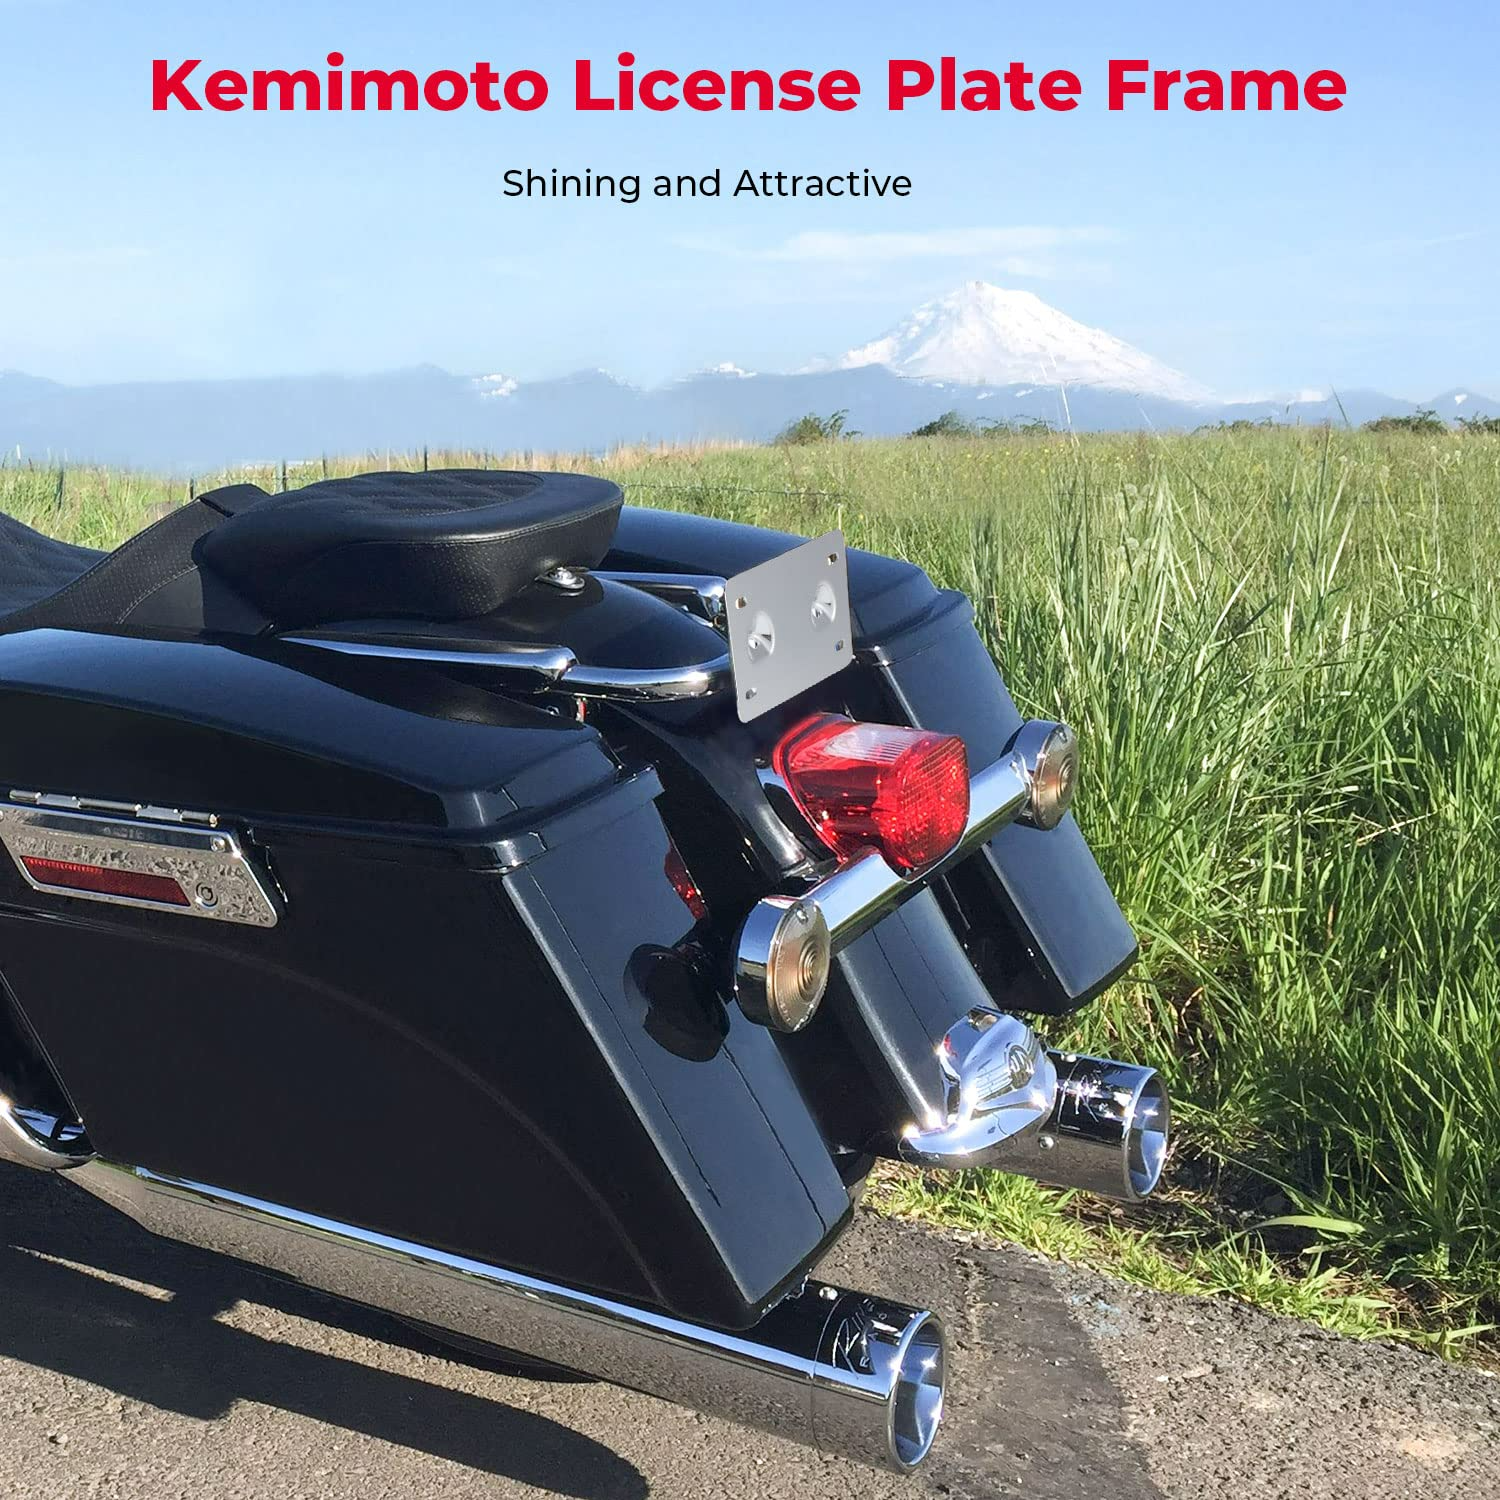 Harley License Plate Brackets - Kemimoto